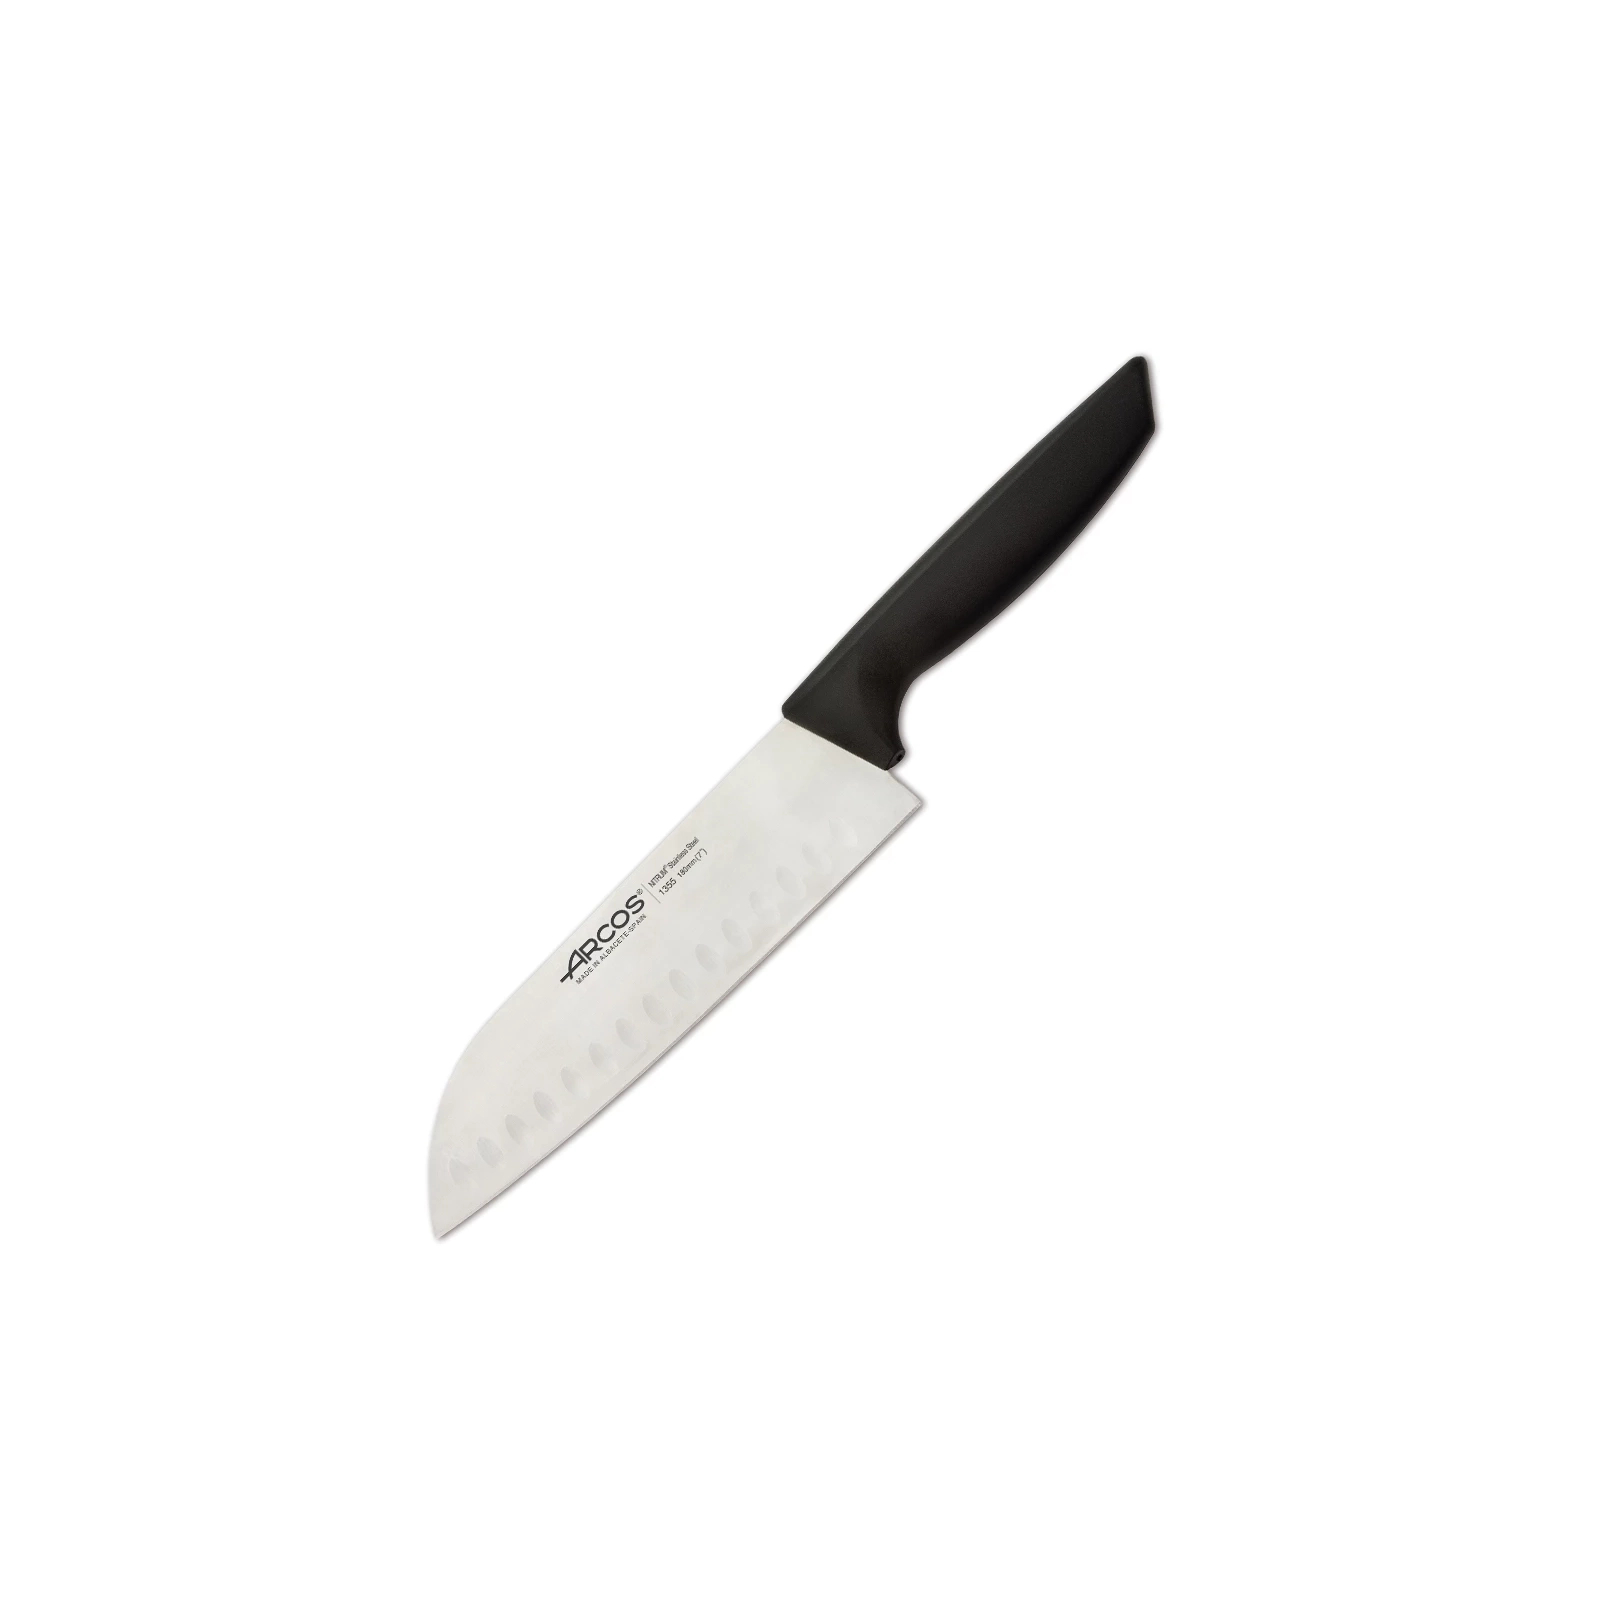 Кухонный нож Arcos Niza Сантоку 180 мм (135500)